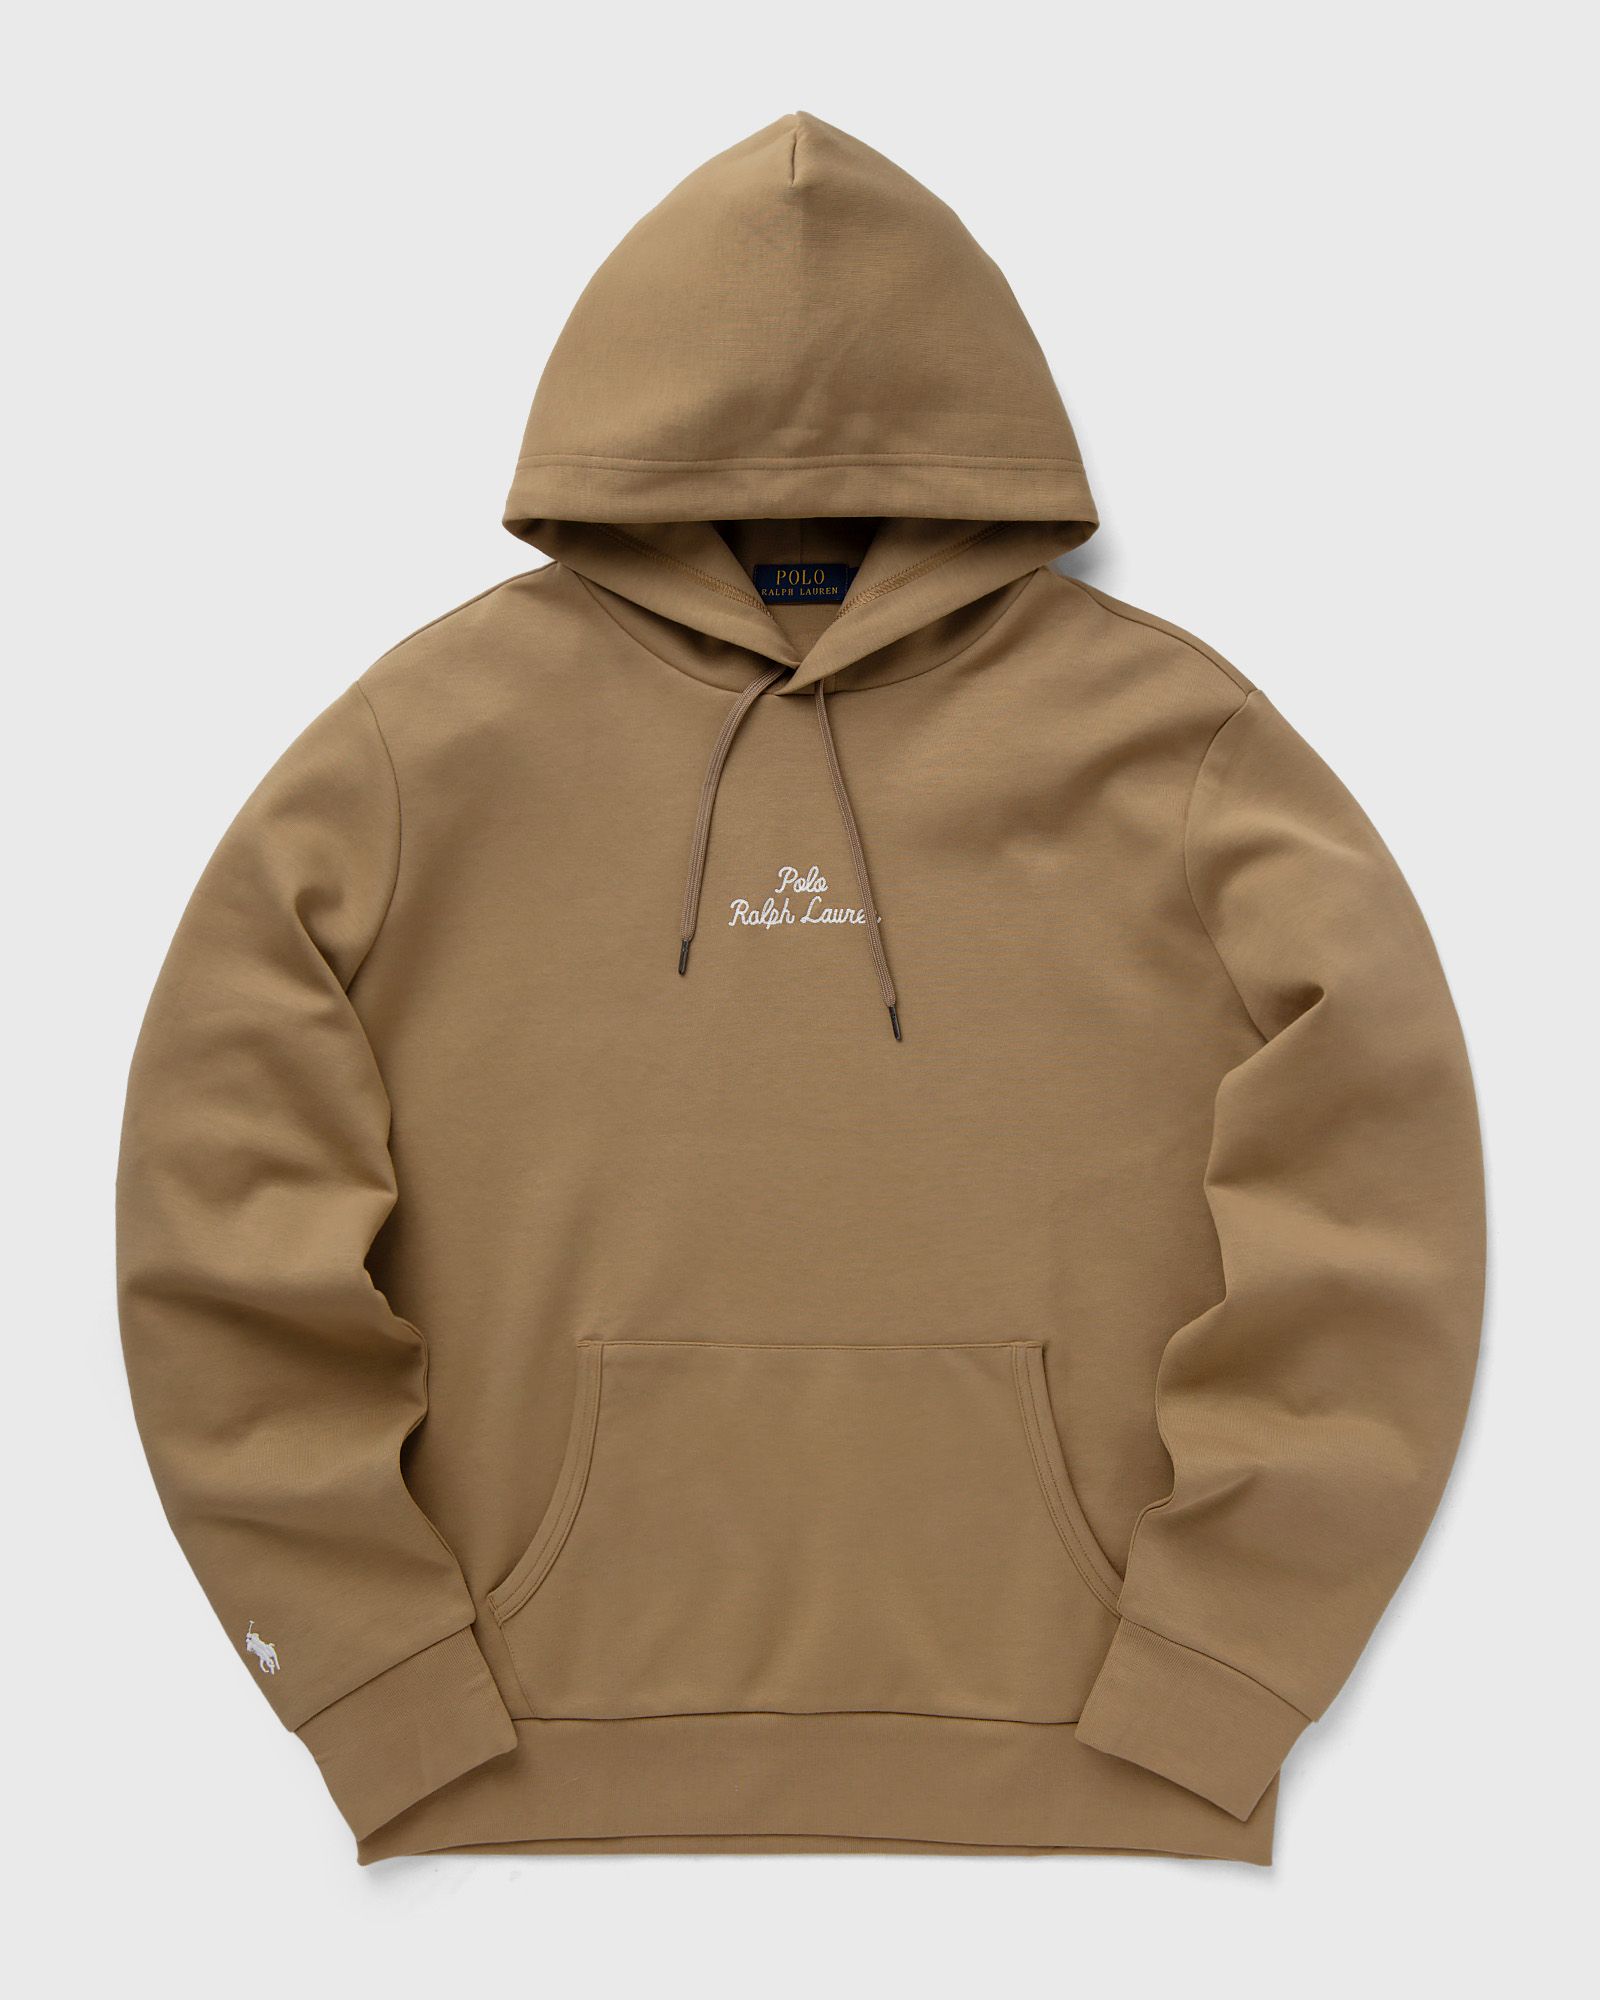 Polo Ralph Lauren - long sleeve-sweatshirt men hoodies brown in größe:xxl